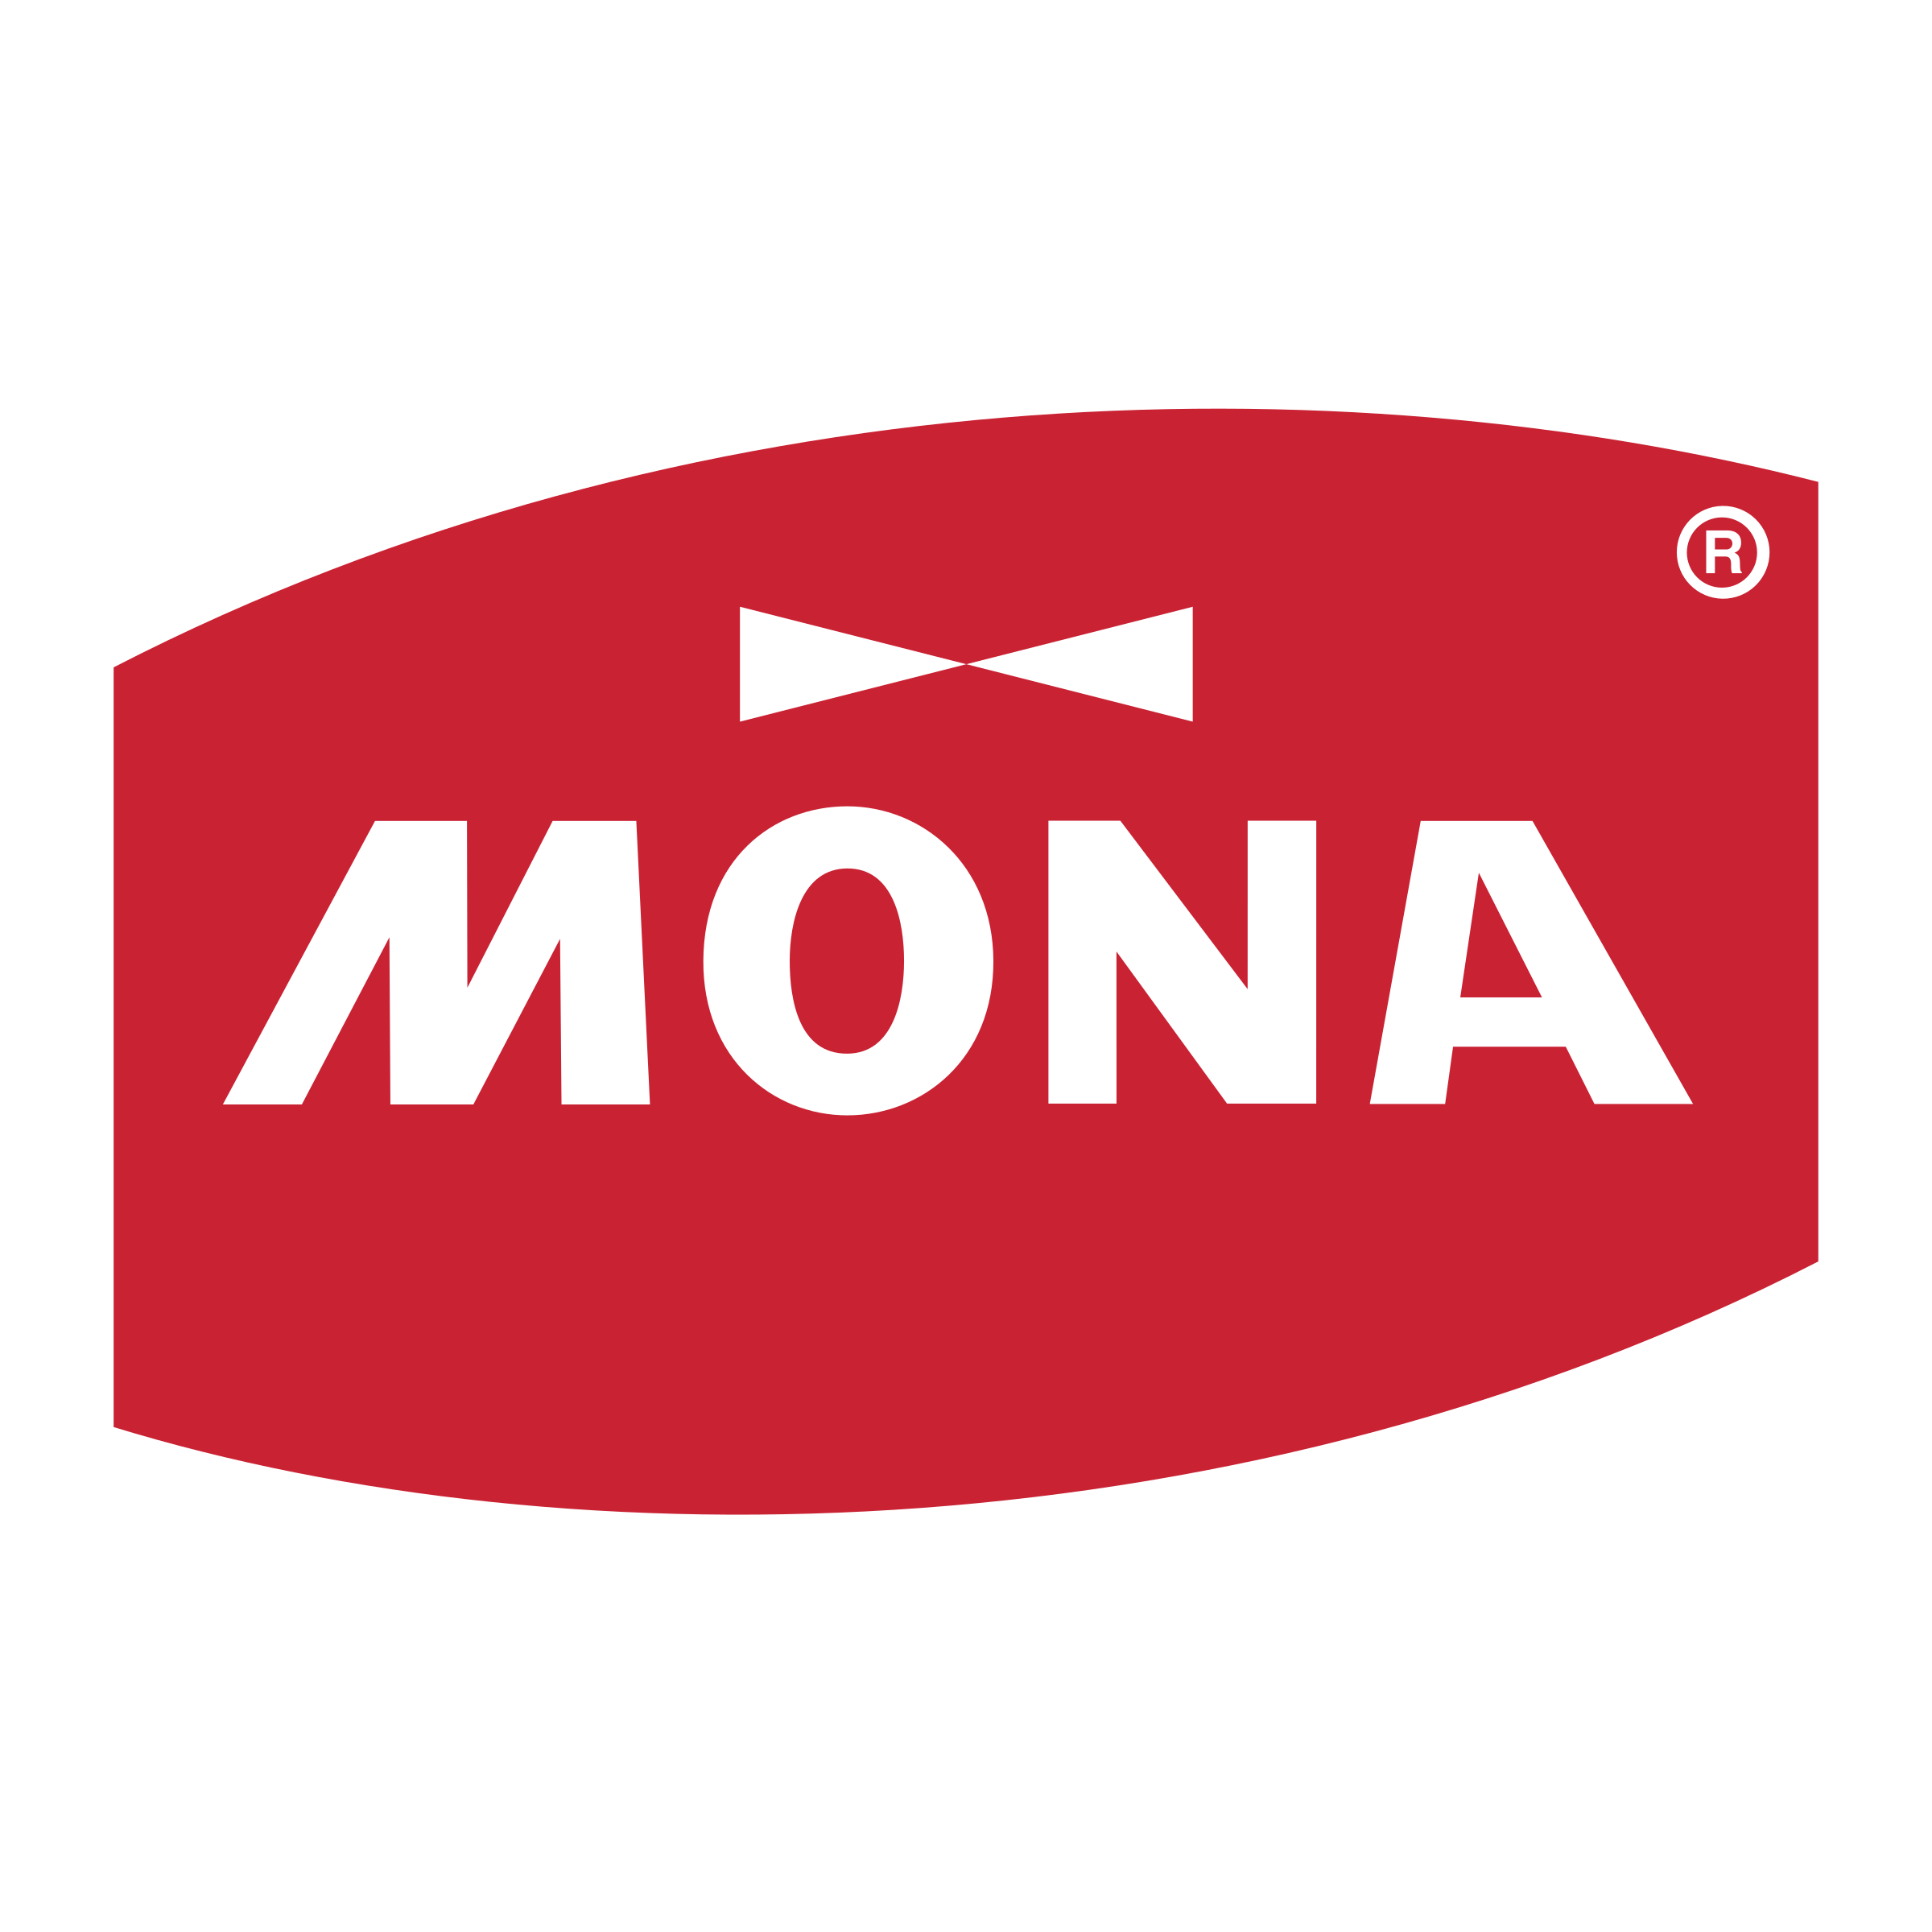 Mona Logo - Mona Logo PNG Transparent & SVG Vector